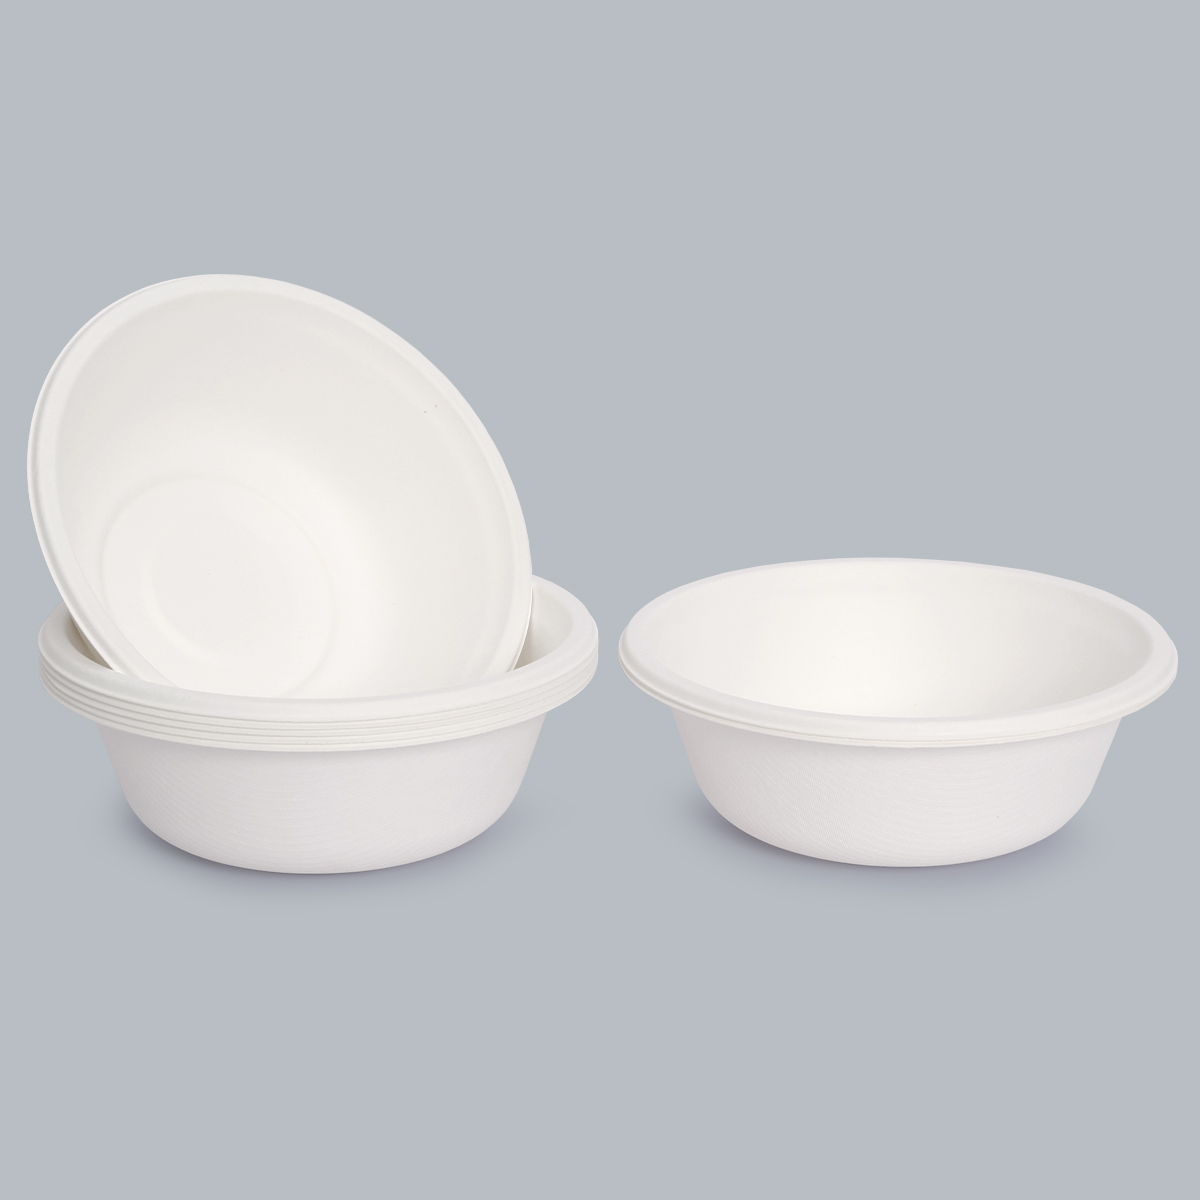 Freezer-safe bowls Disposable environmentally friendly tableware Refrigerator-safe bowls